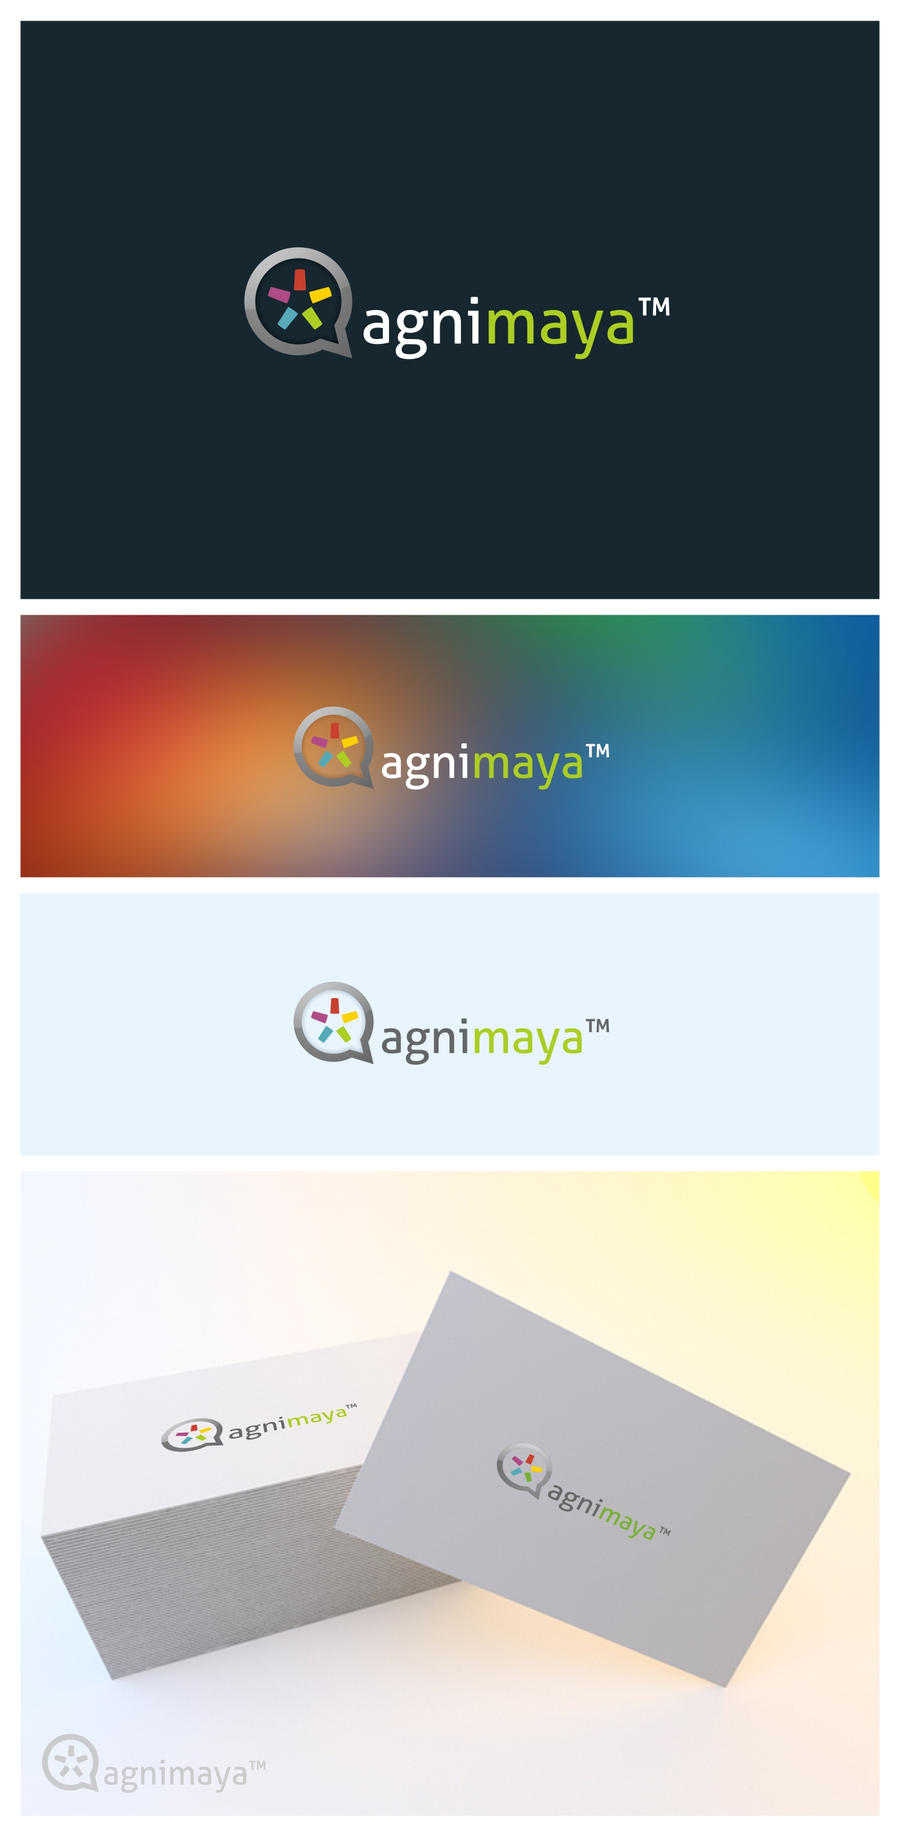 Agnimaya Logo